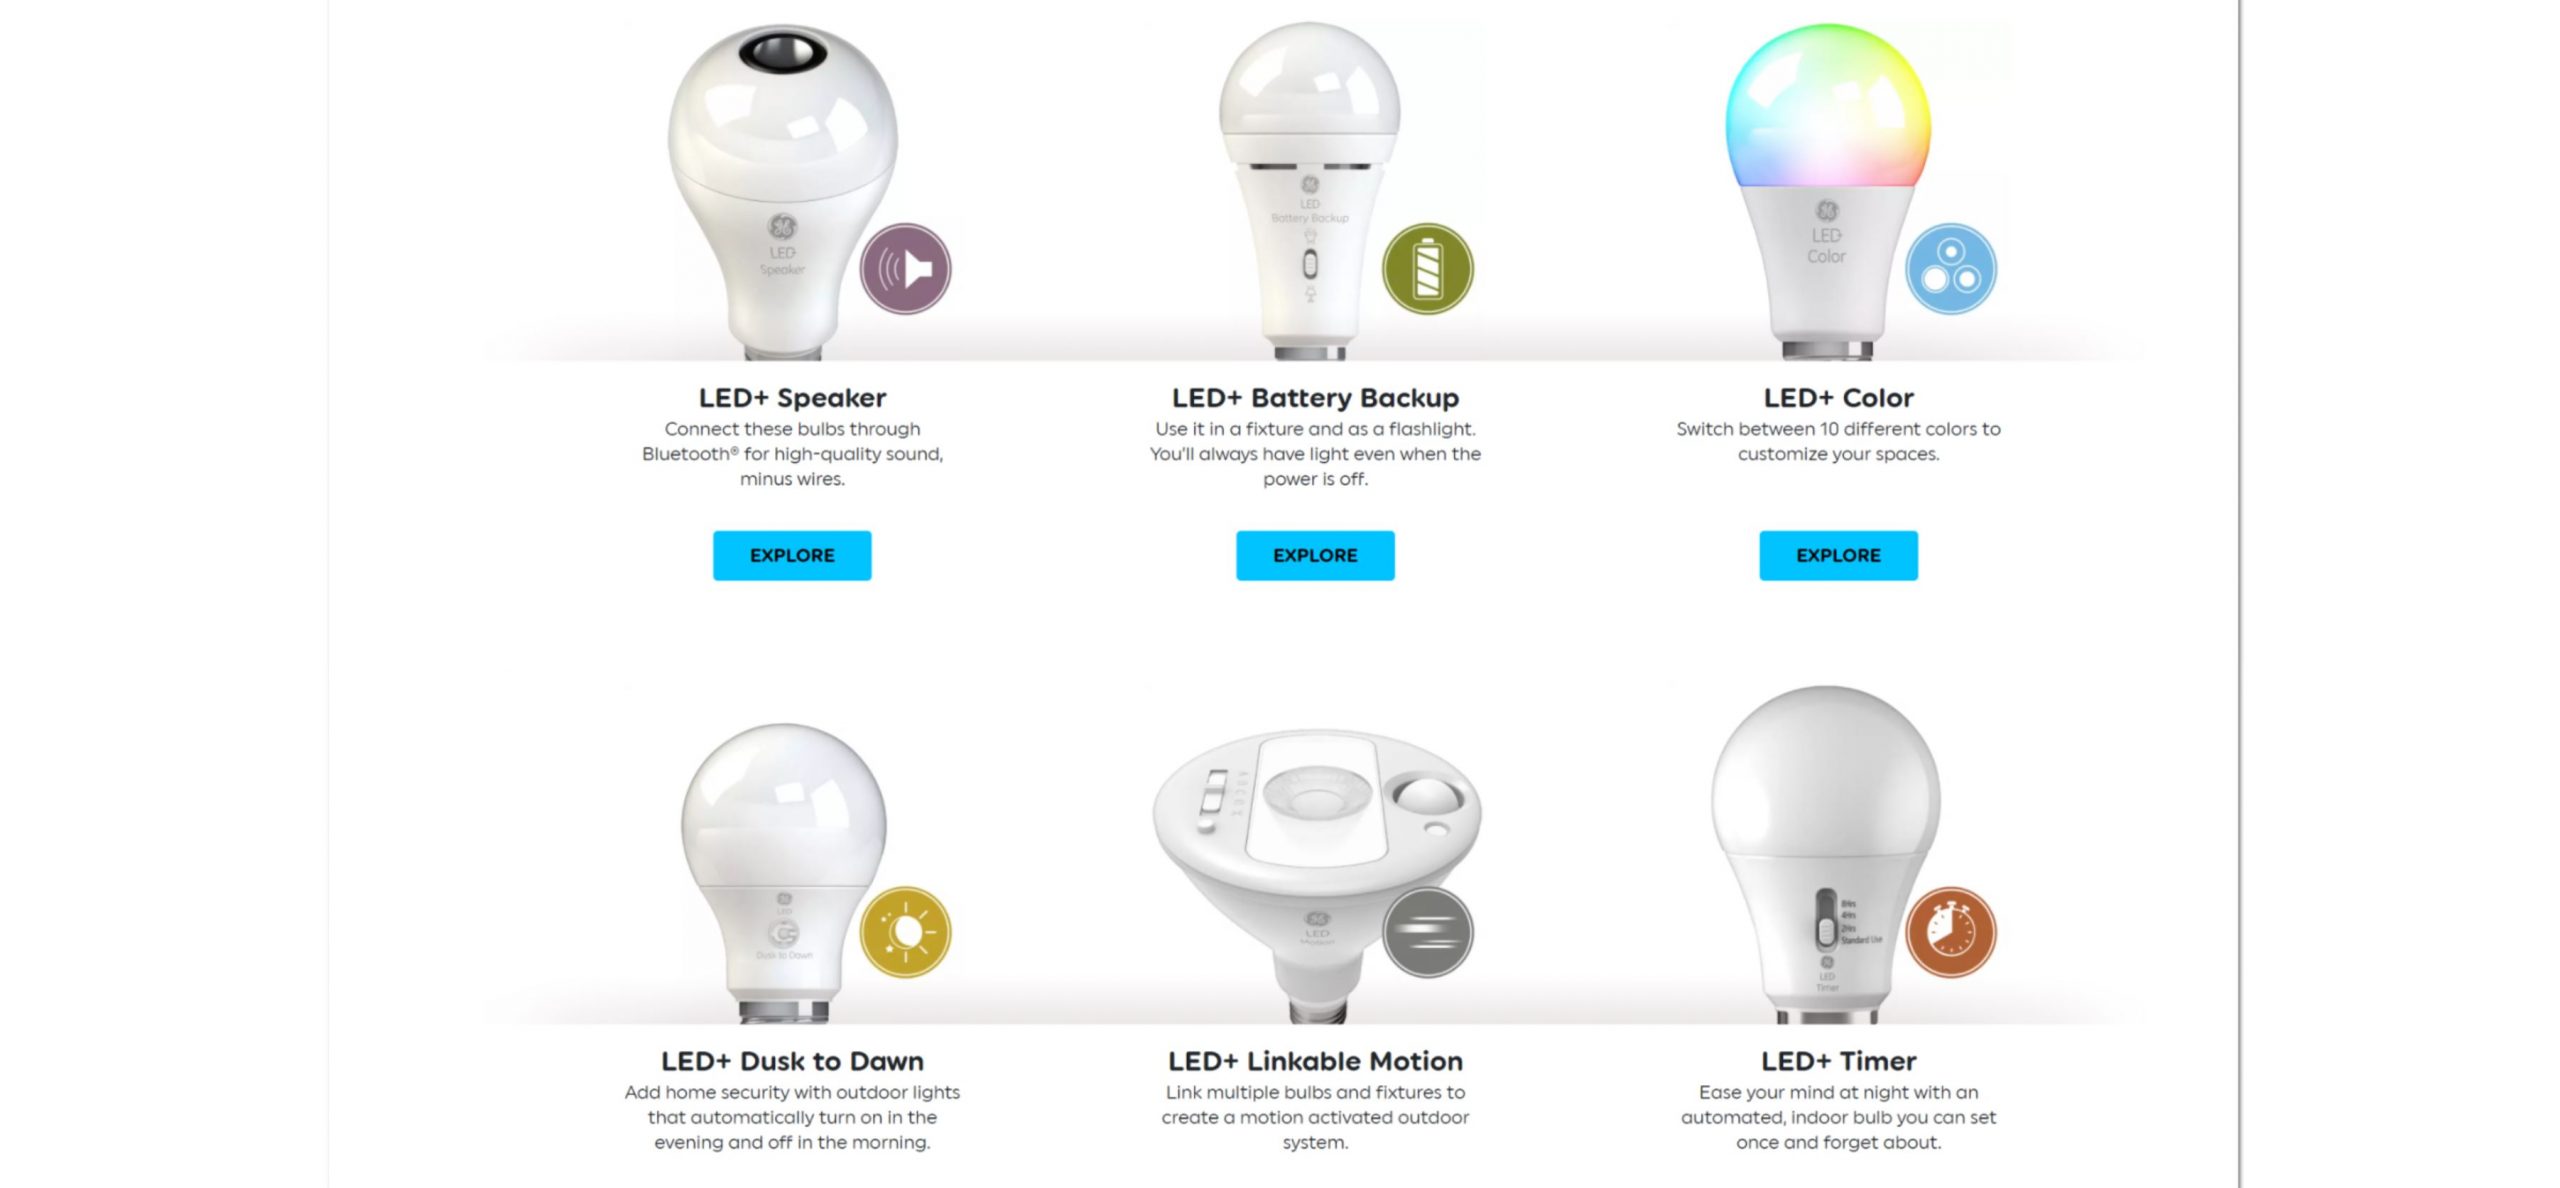 The Greatest Idea Since The Lightbulb – GE LED+ Line